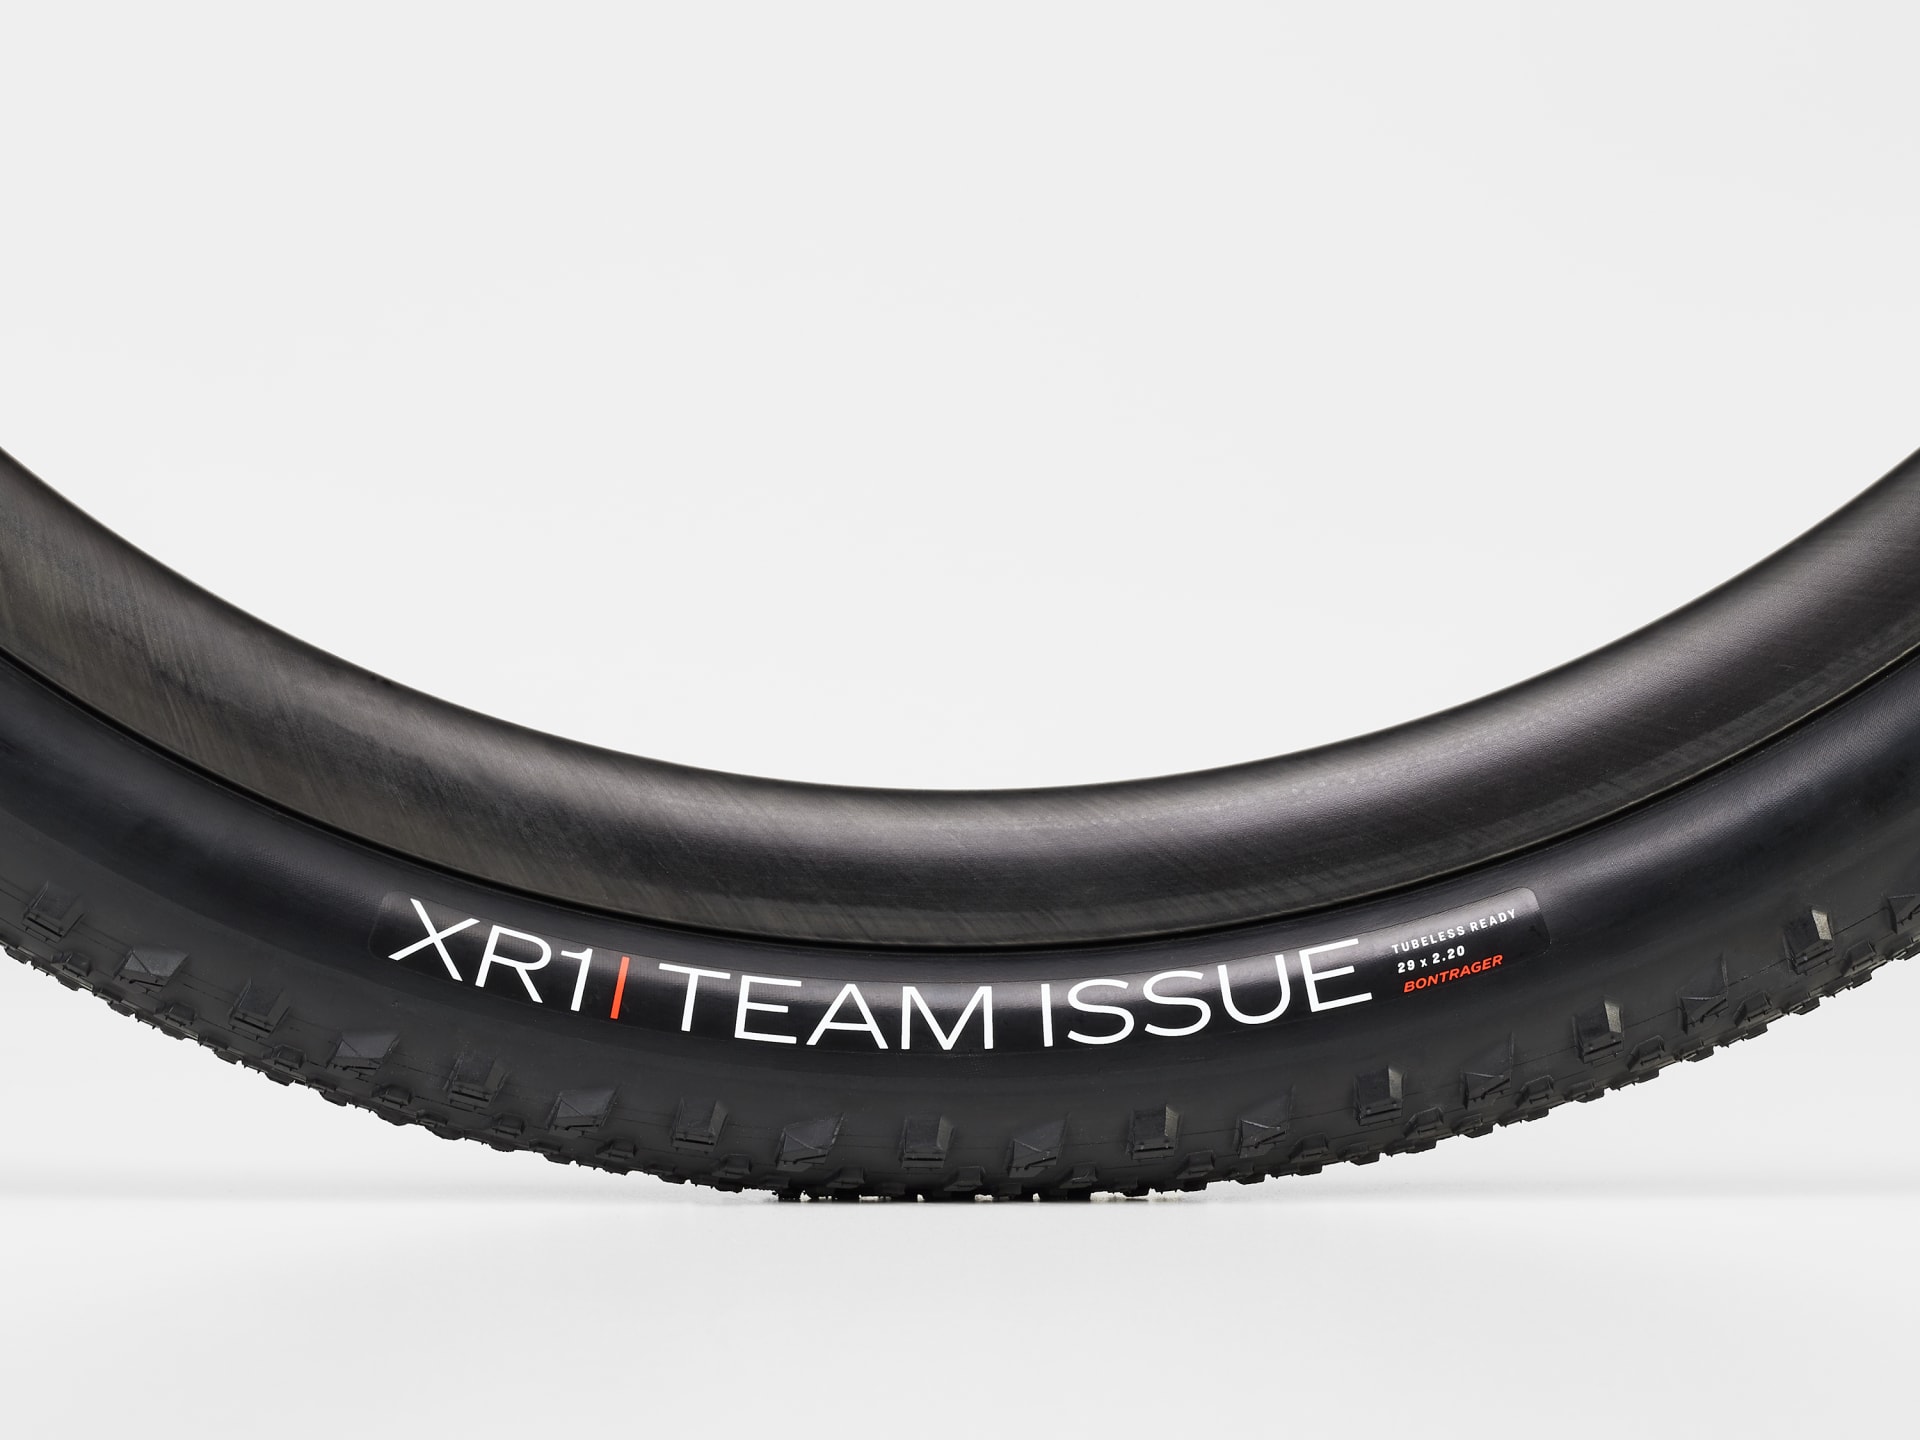 Bontrager XR1 Team Issue TLR MTB Tire